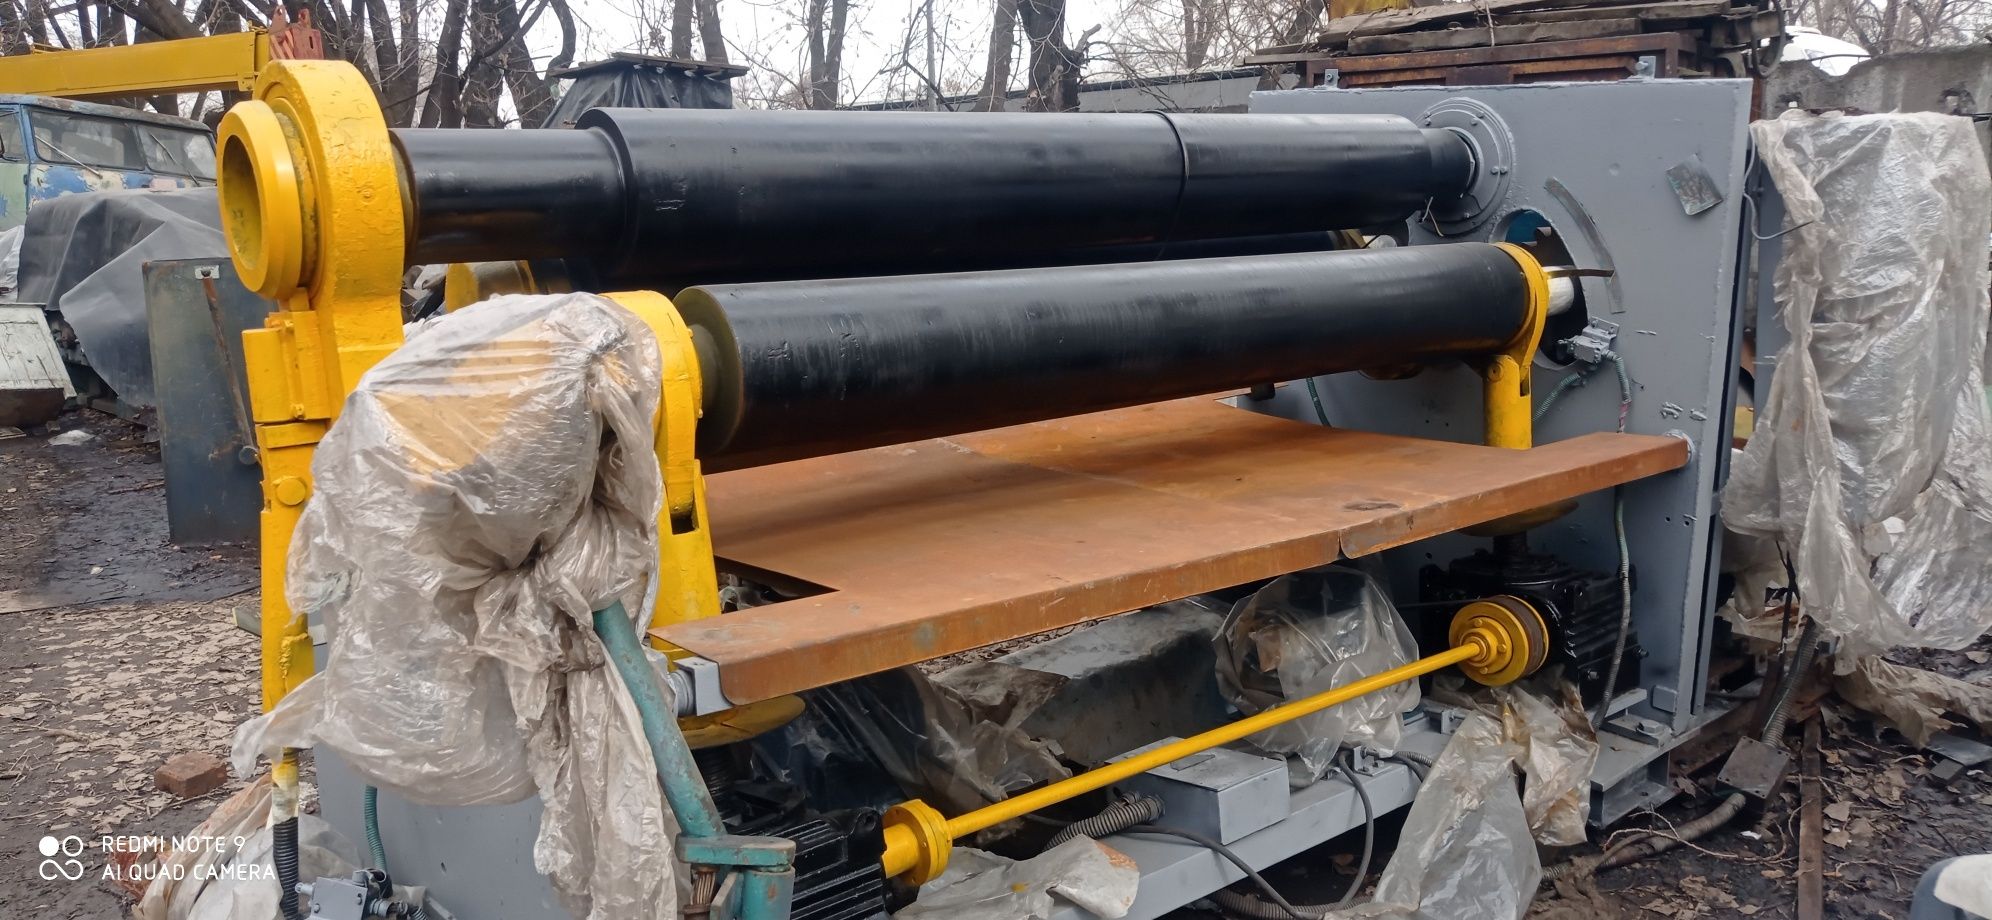 Станок Вальцы Листогиб гильотина 4 метра  Алматы тельфер кран балка